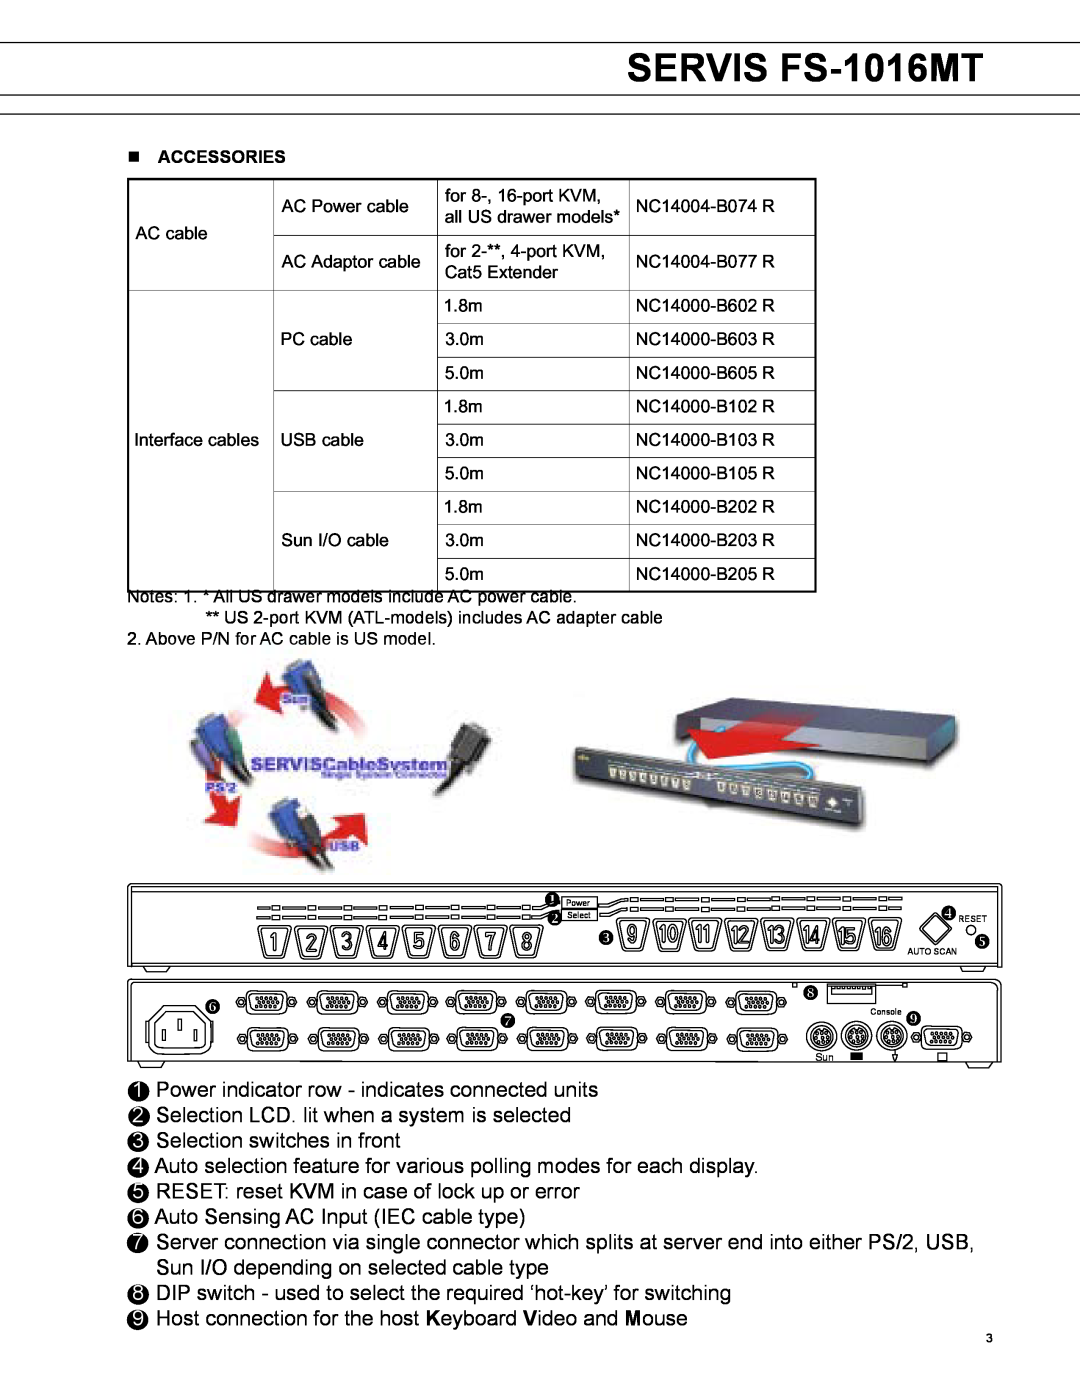 Fujitsu NC14004-B162 R manual SERVIS FS-1016MT, 1Power indicator row - indicates connected units 